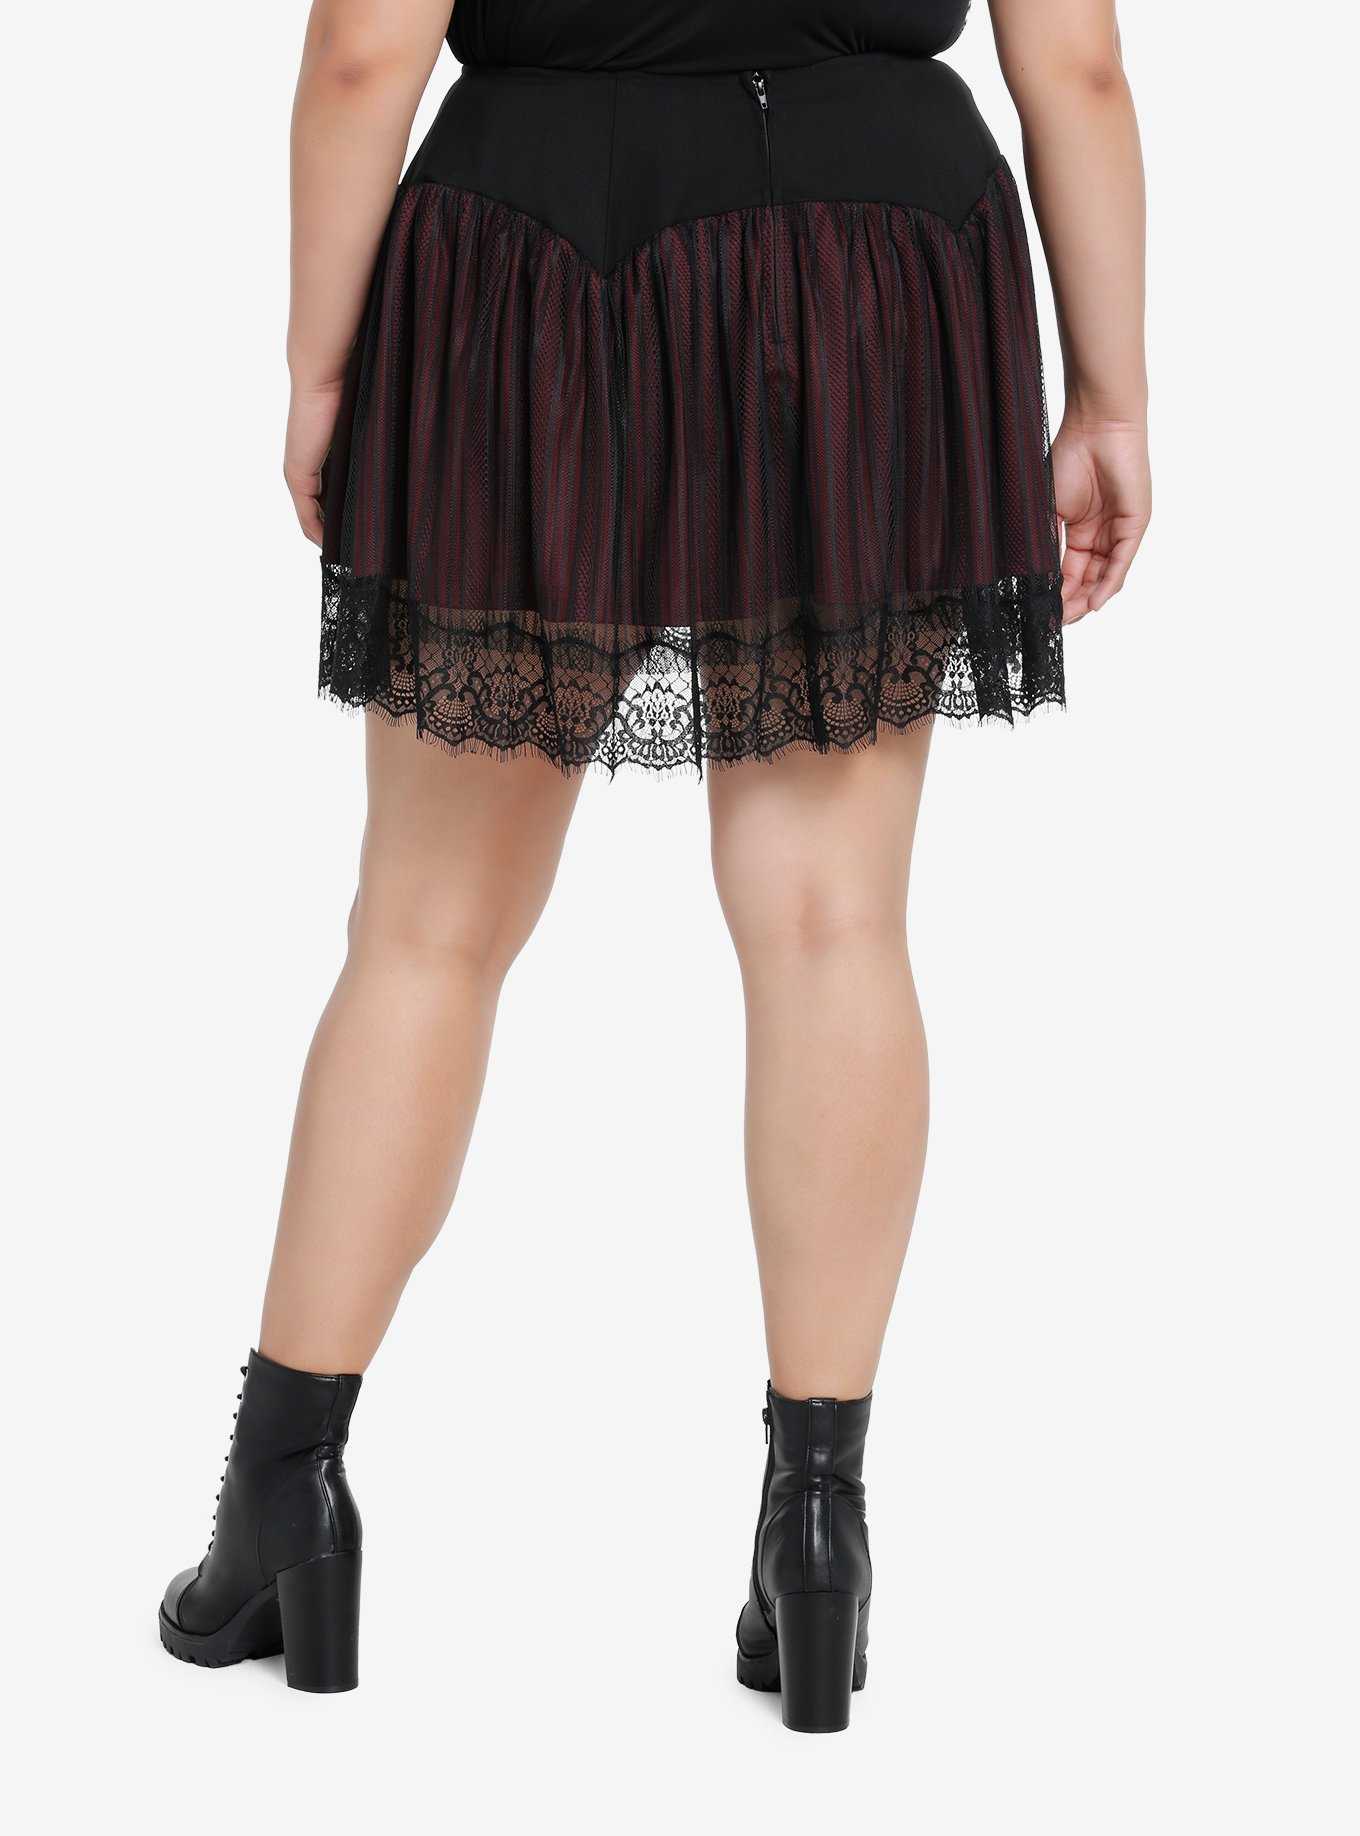 Thorn & Fable Burgundy & Black Lace Mesh Skirt Plus Size, , hi-res